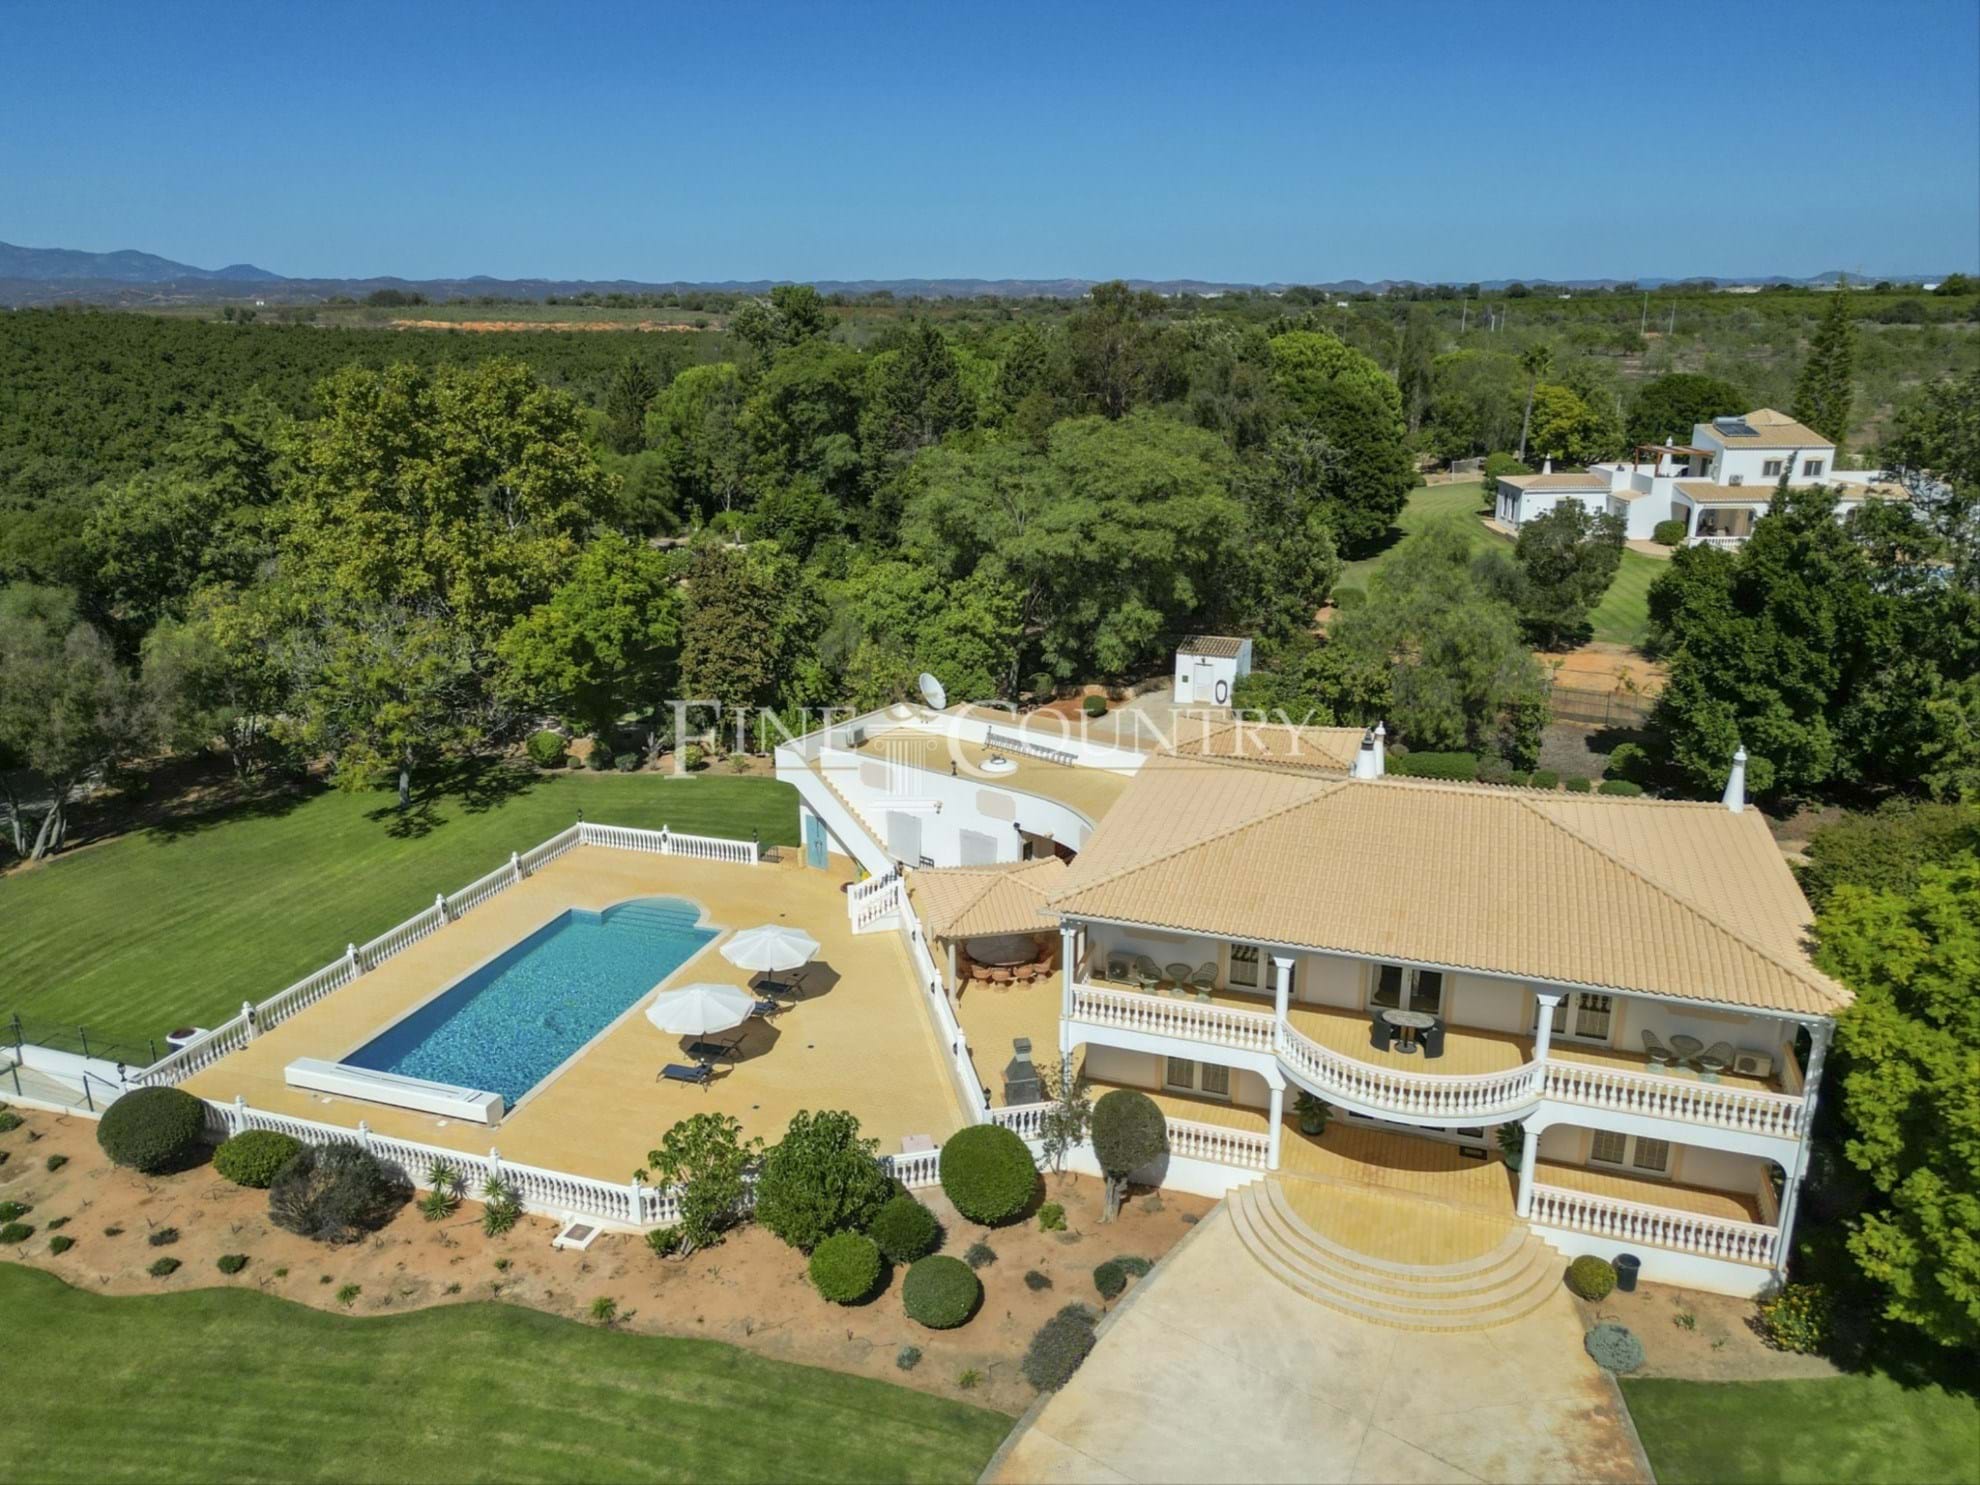 Lagoa/Carvoeiro – Spacious 4+1-bedroom villa with pool on large private plot Accommodation in Lagoa